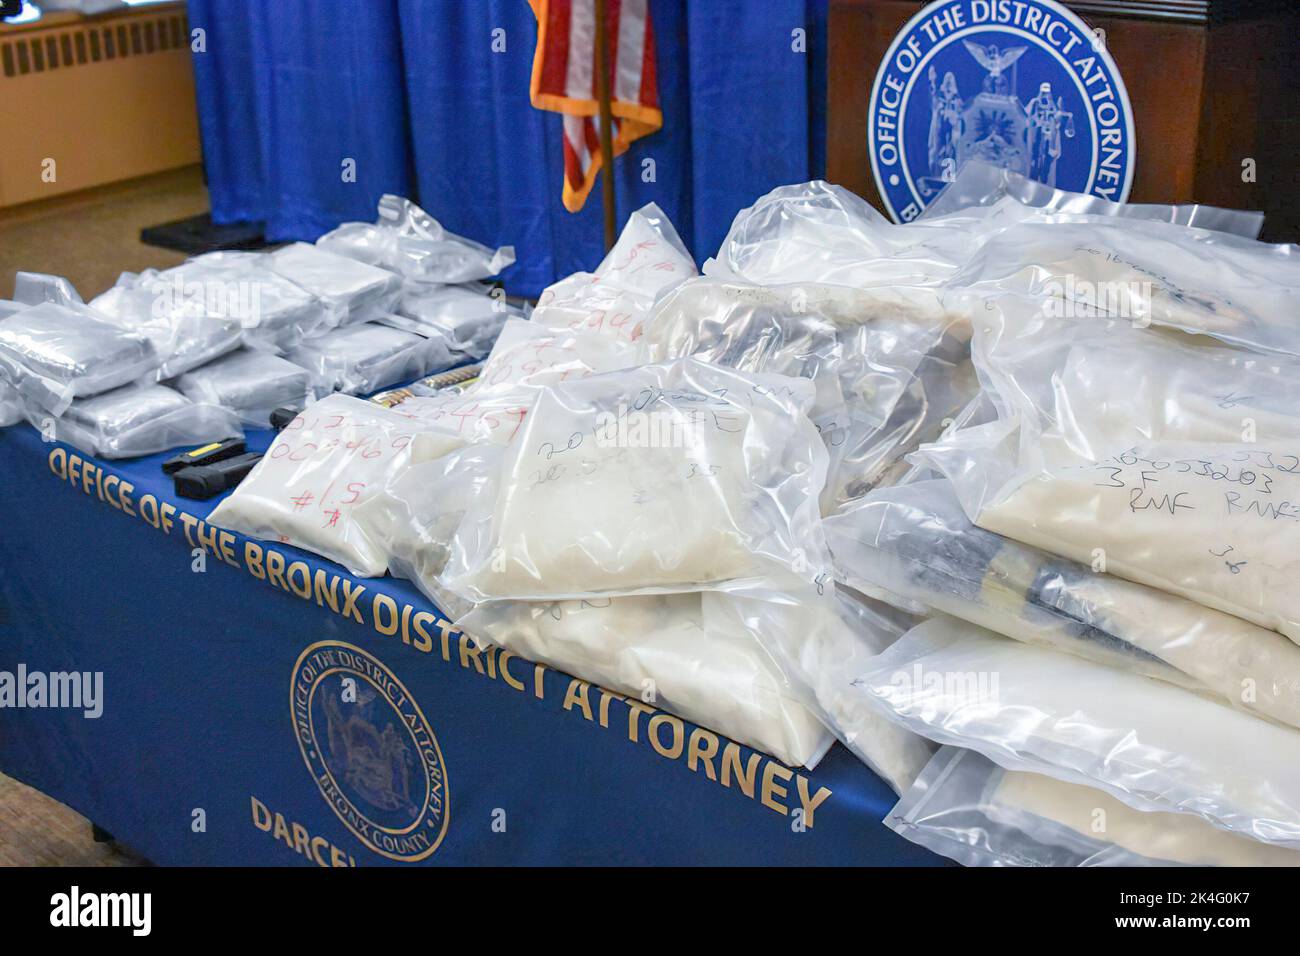 Fentynal drug seizure in New York City Stock Photo